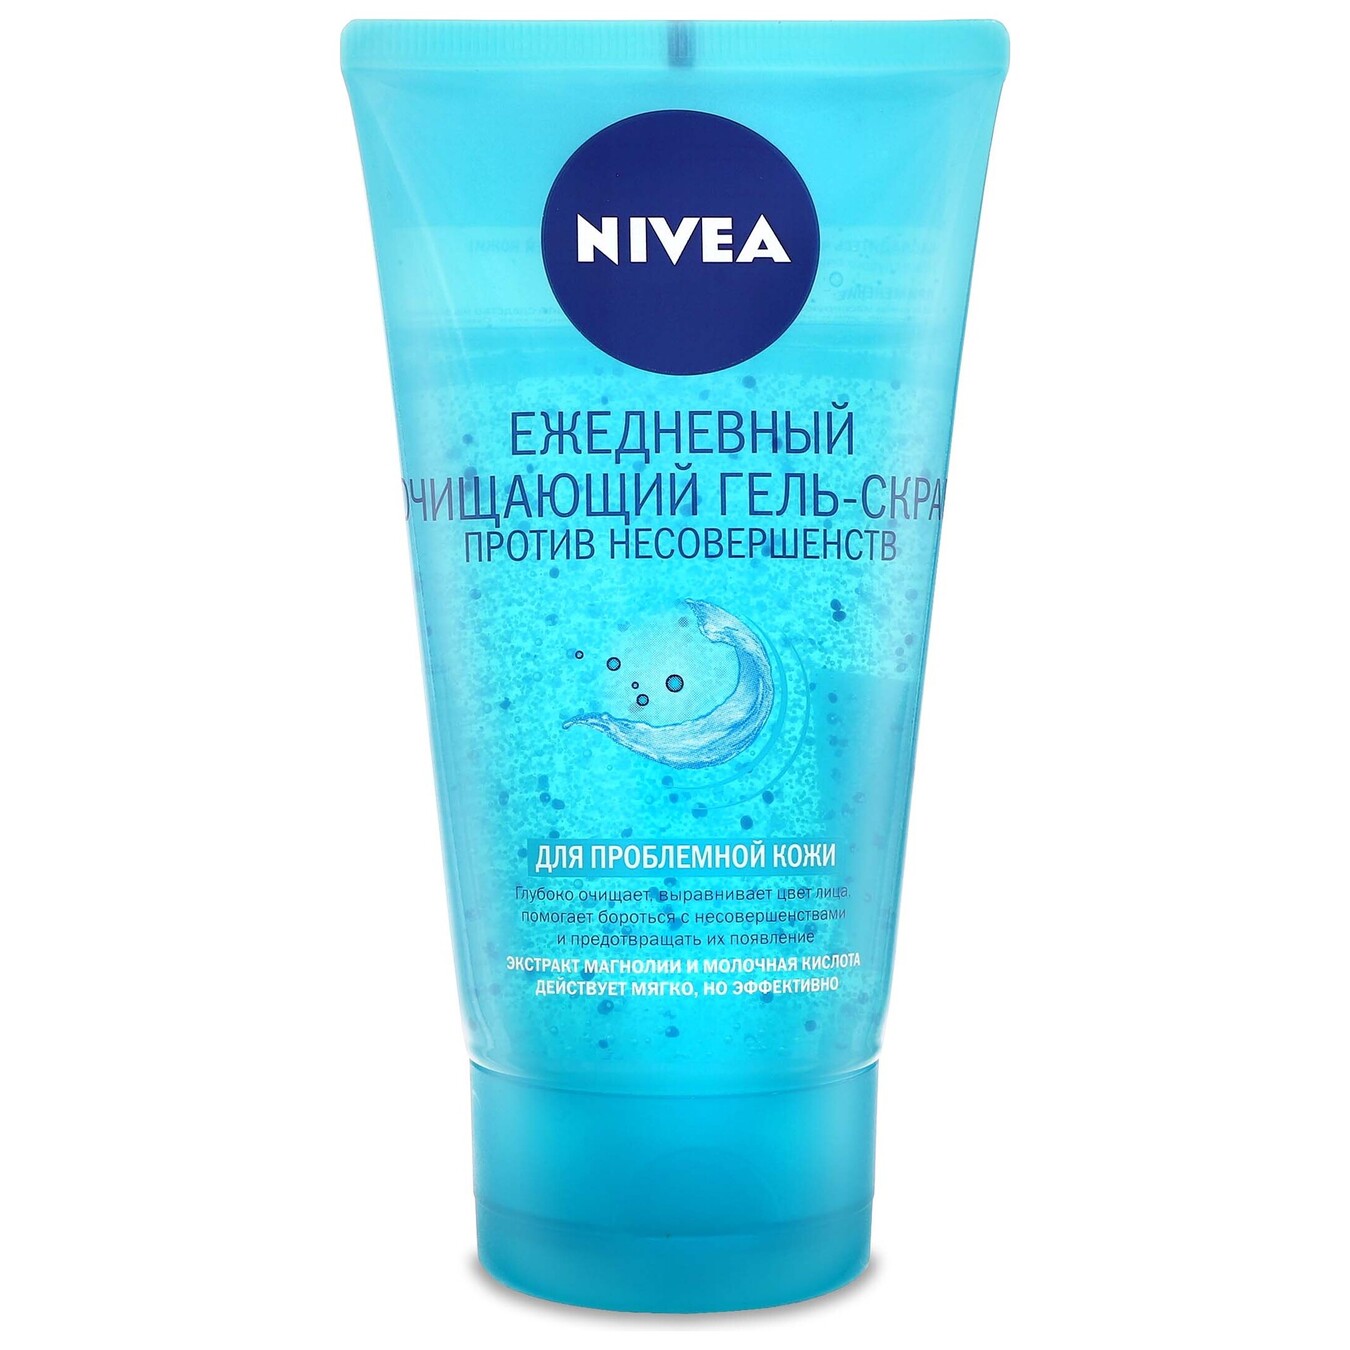 Gel-scrub Nivea daily cleansing against skin imperfect 150ml